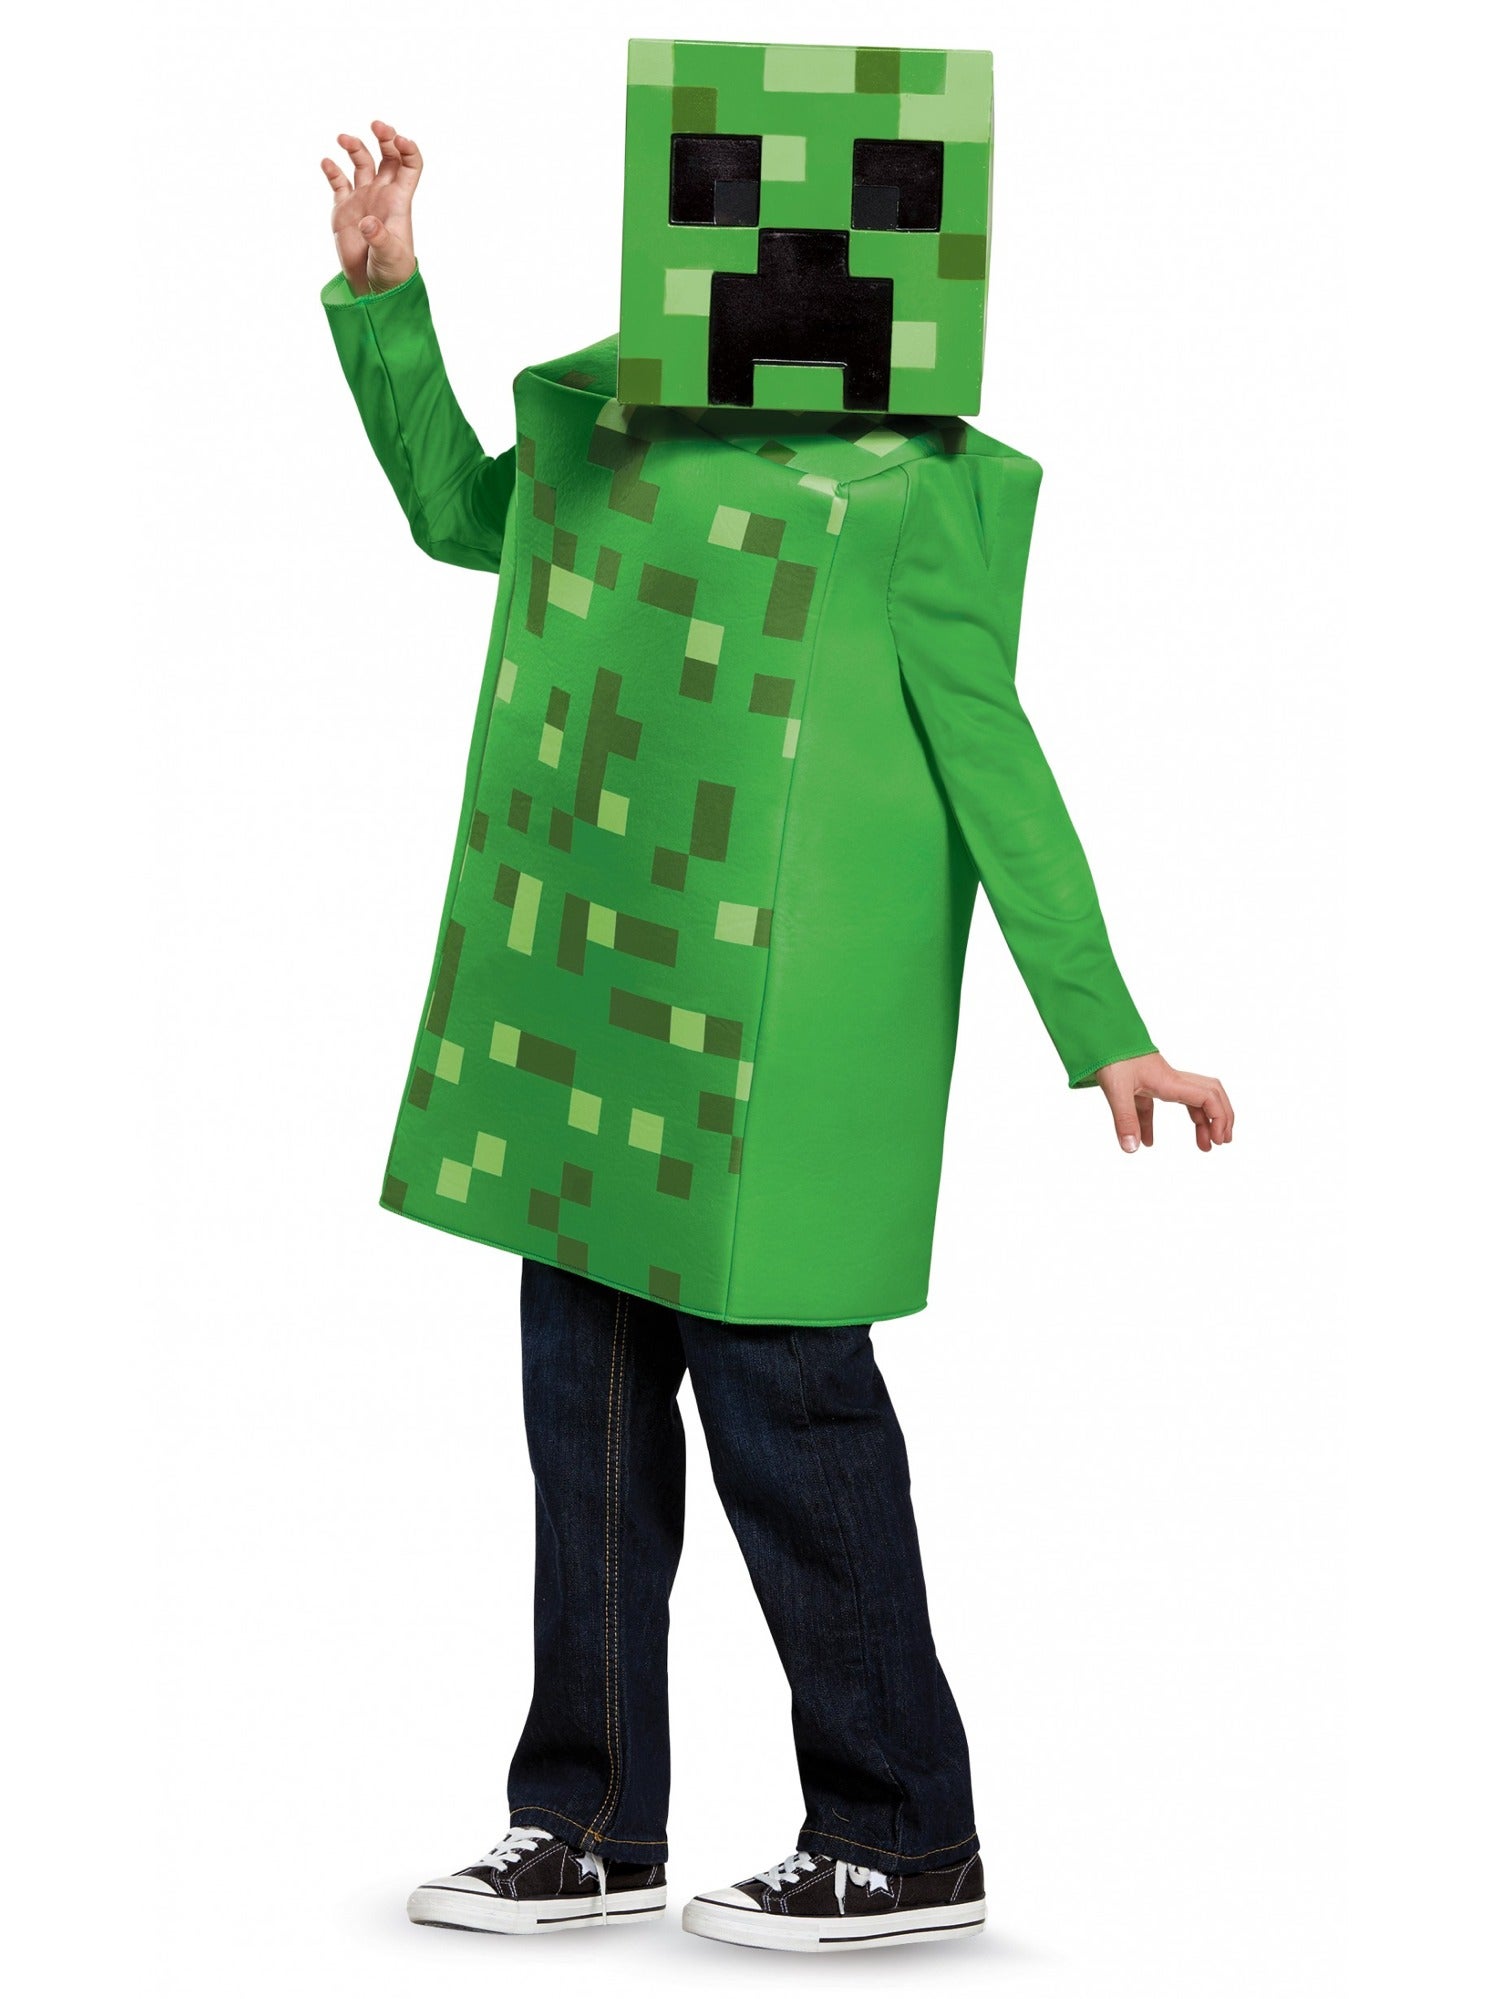 Hobbypos Creeper Mojang Minecraft Hostile Mobs Video Game Fancy Dress Up Boys Costume